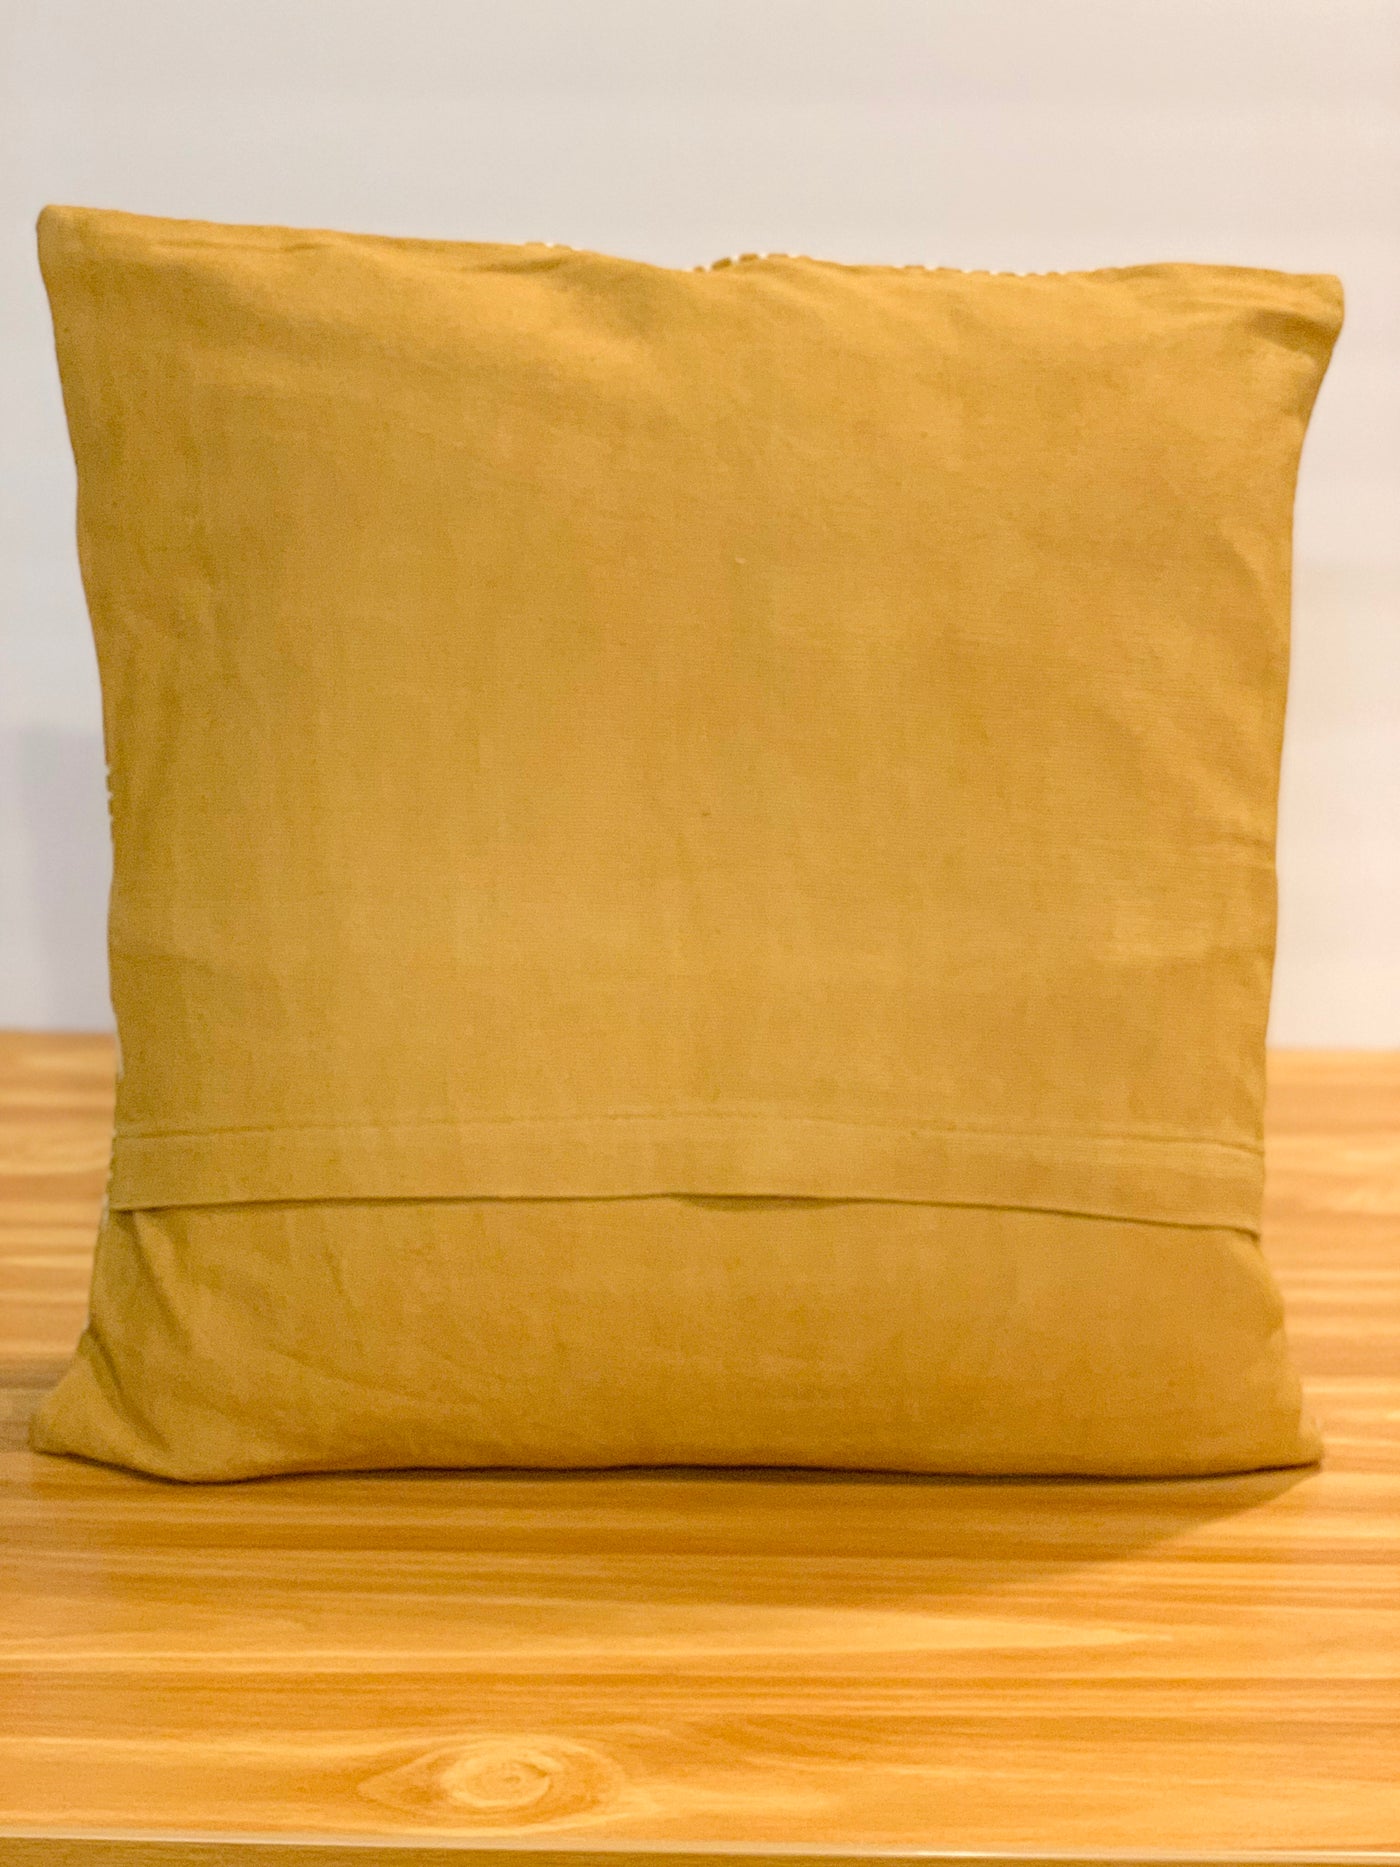 Segou Square Organic Coton Pillow CaseSARAMANI HOUSE 